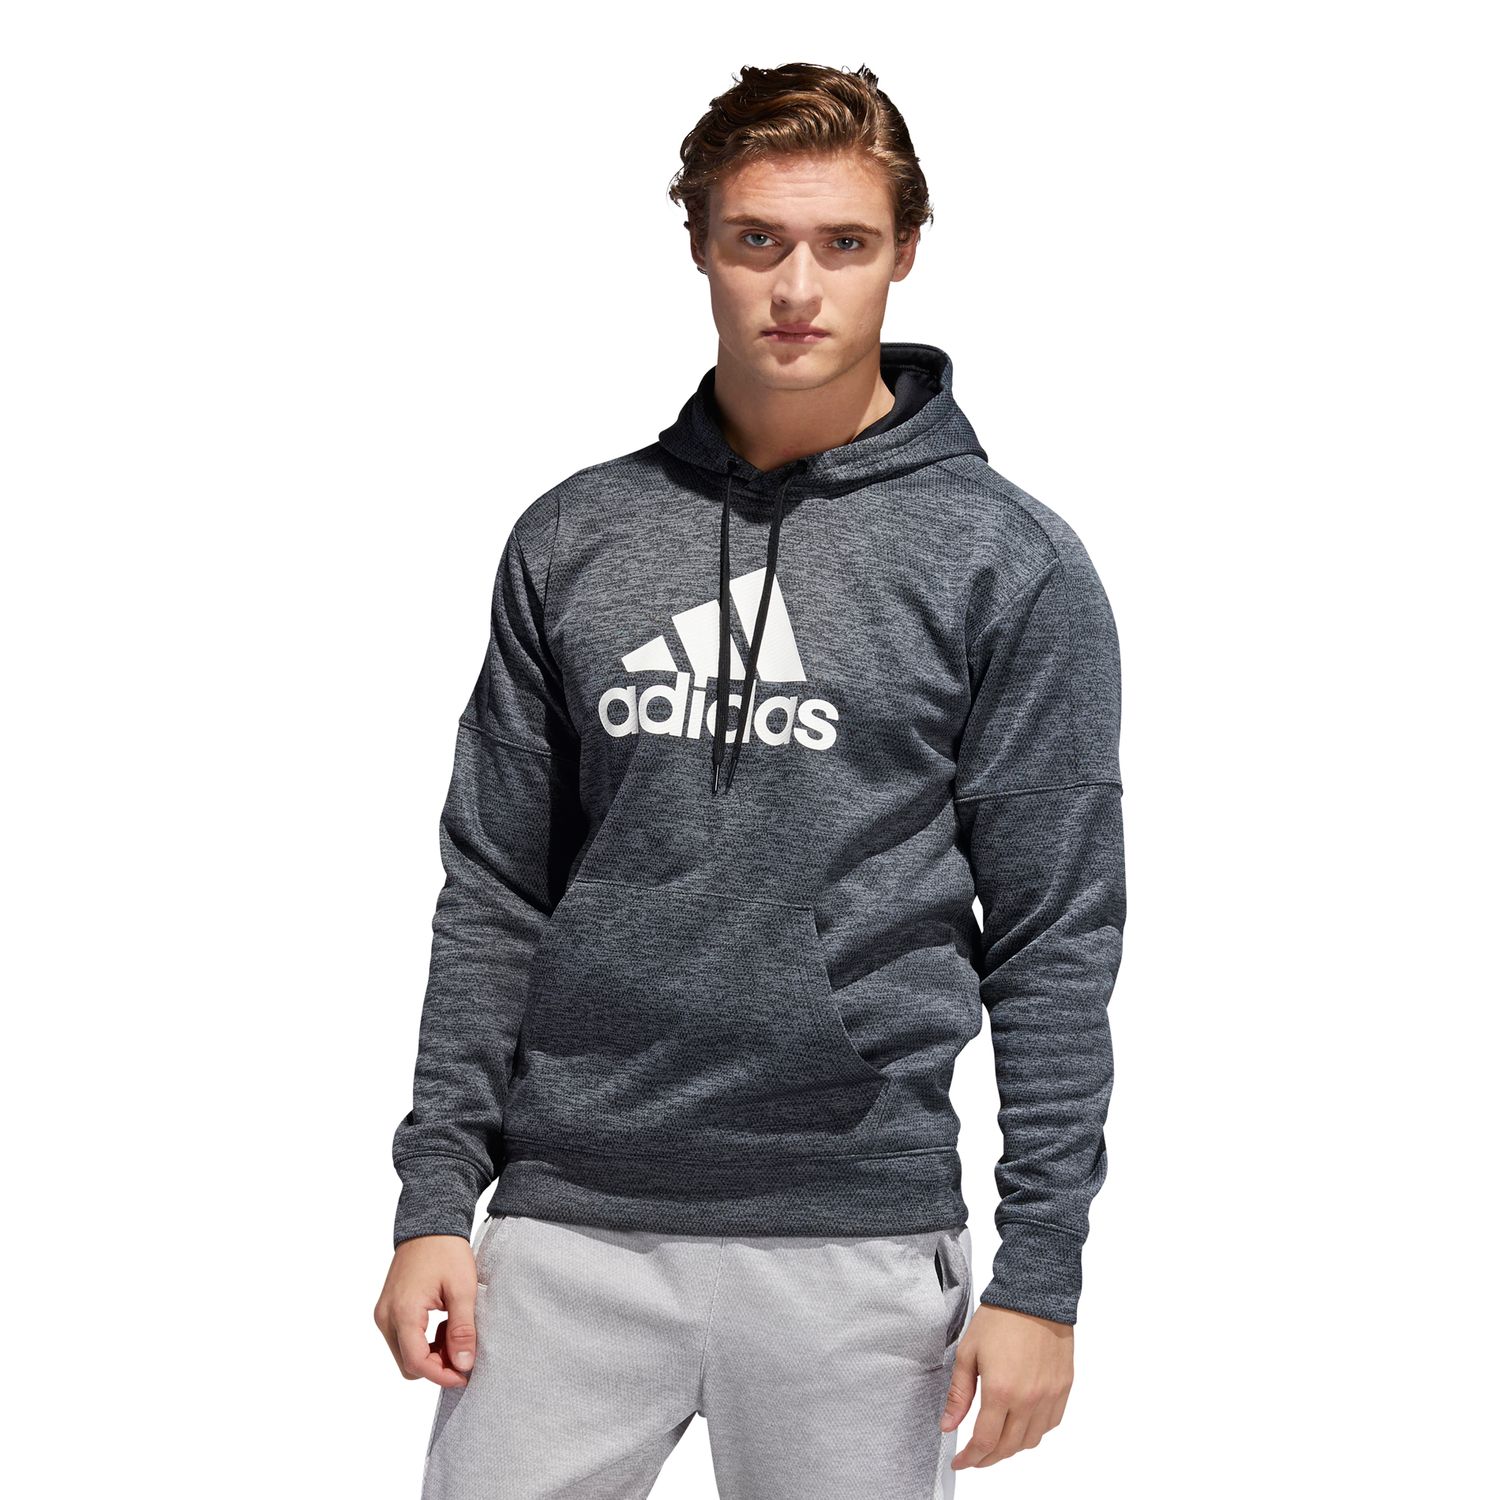 adidas team issue hoodie